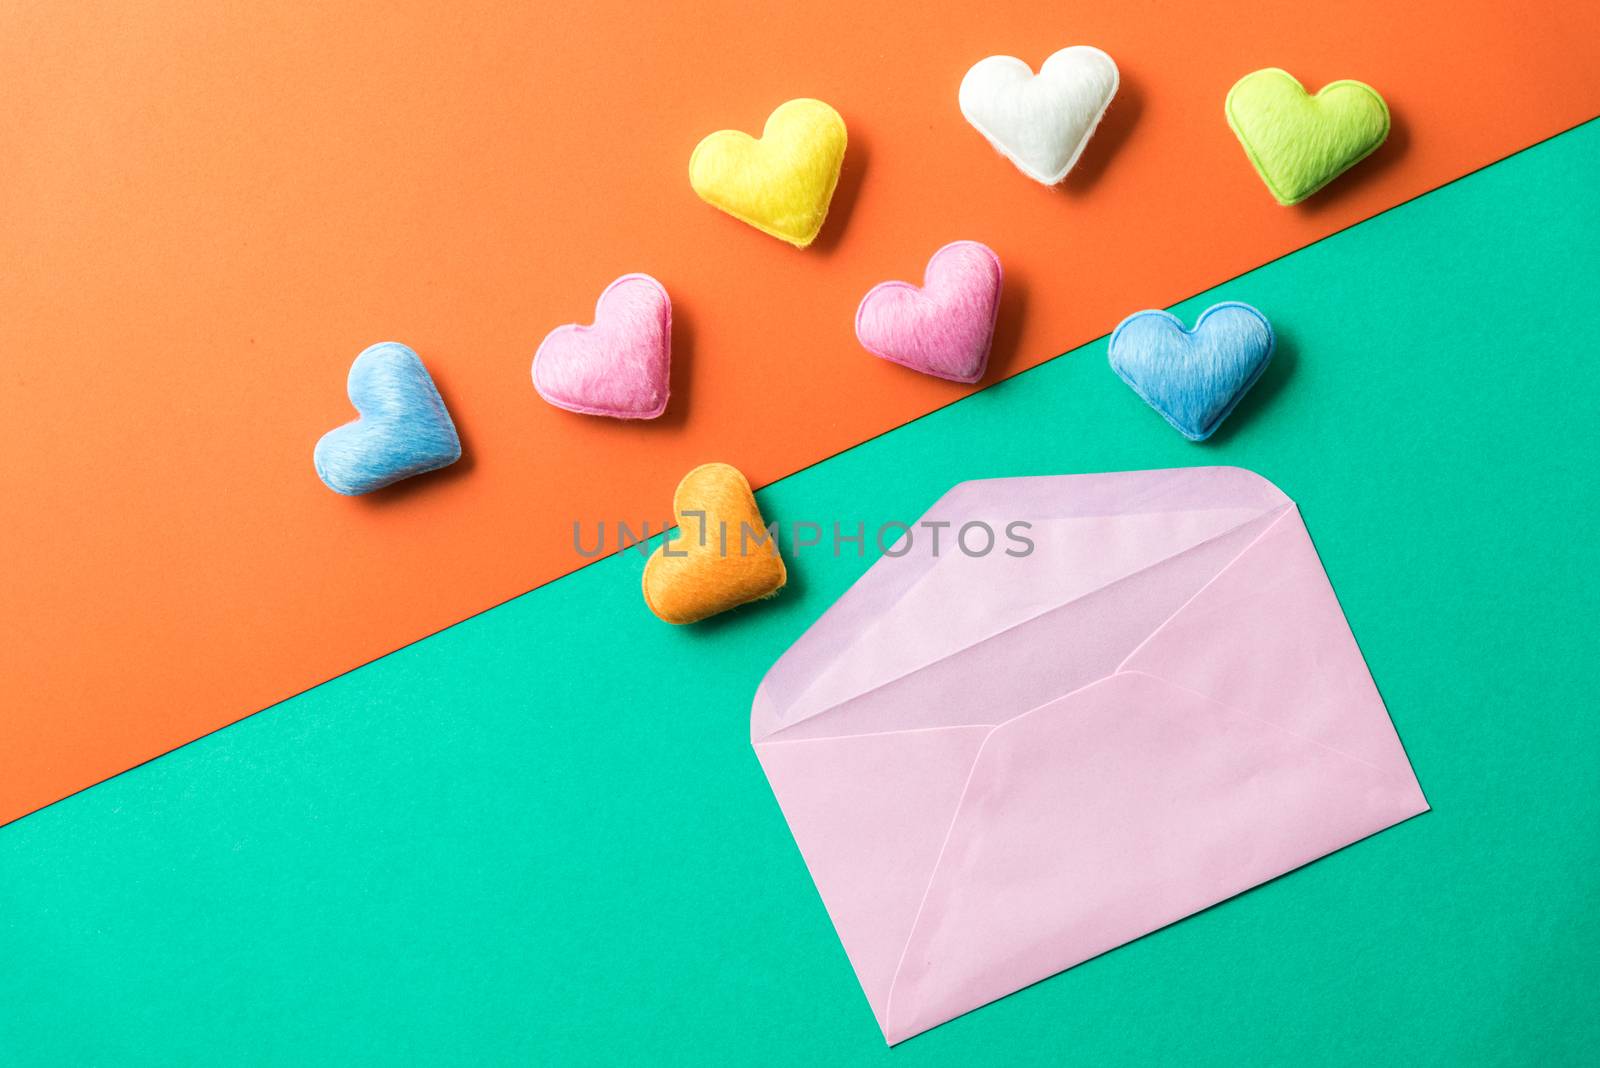 mini heart splash out from pink envelop , valentine concept